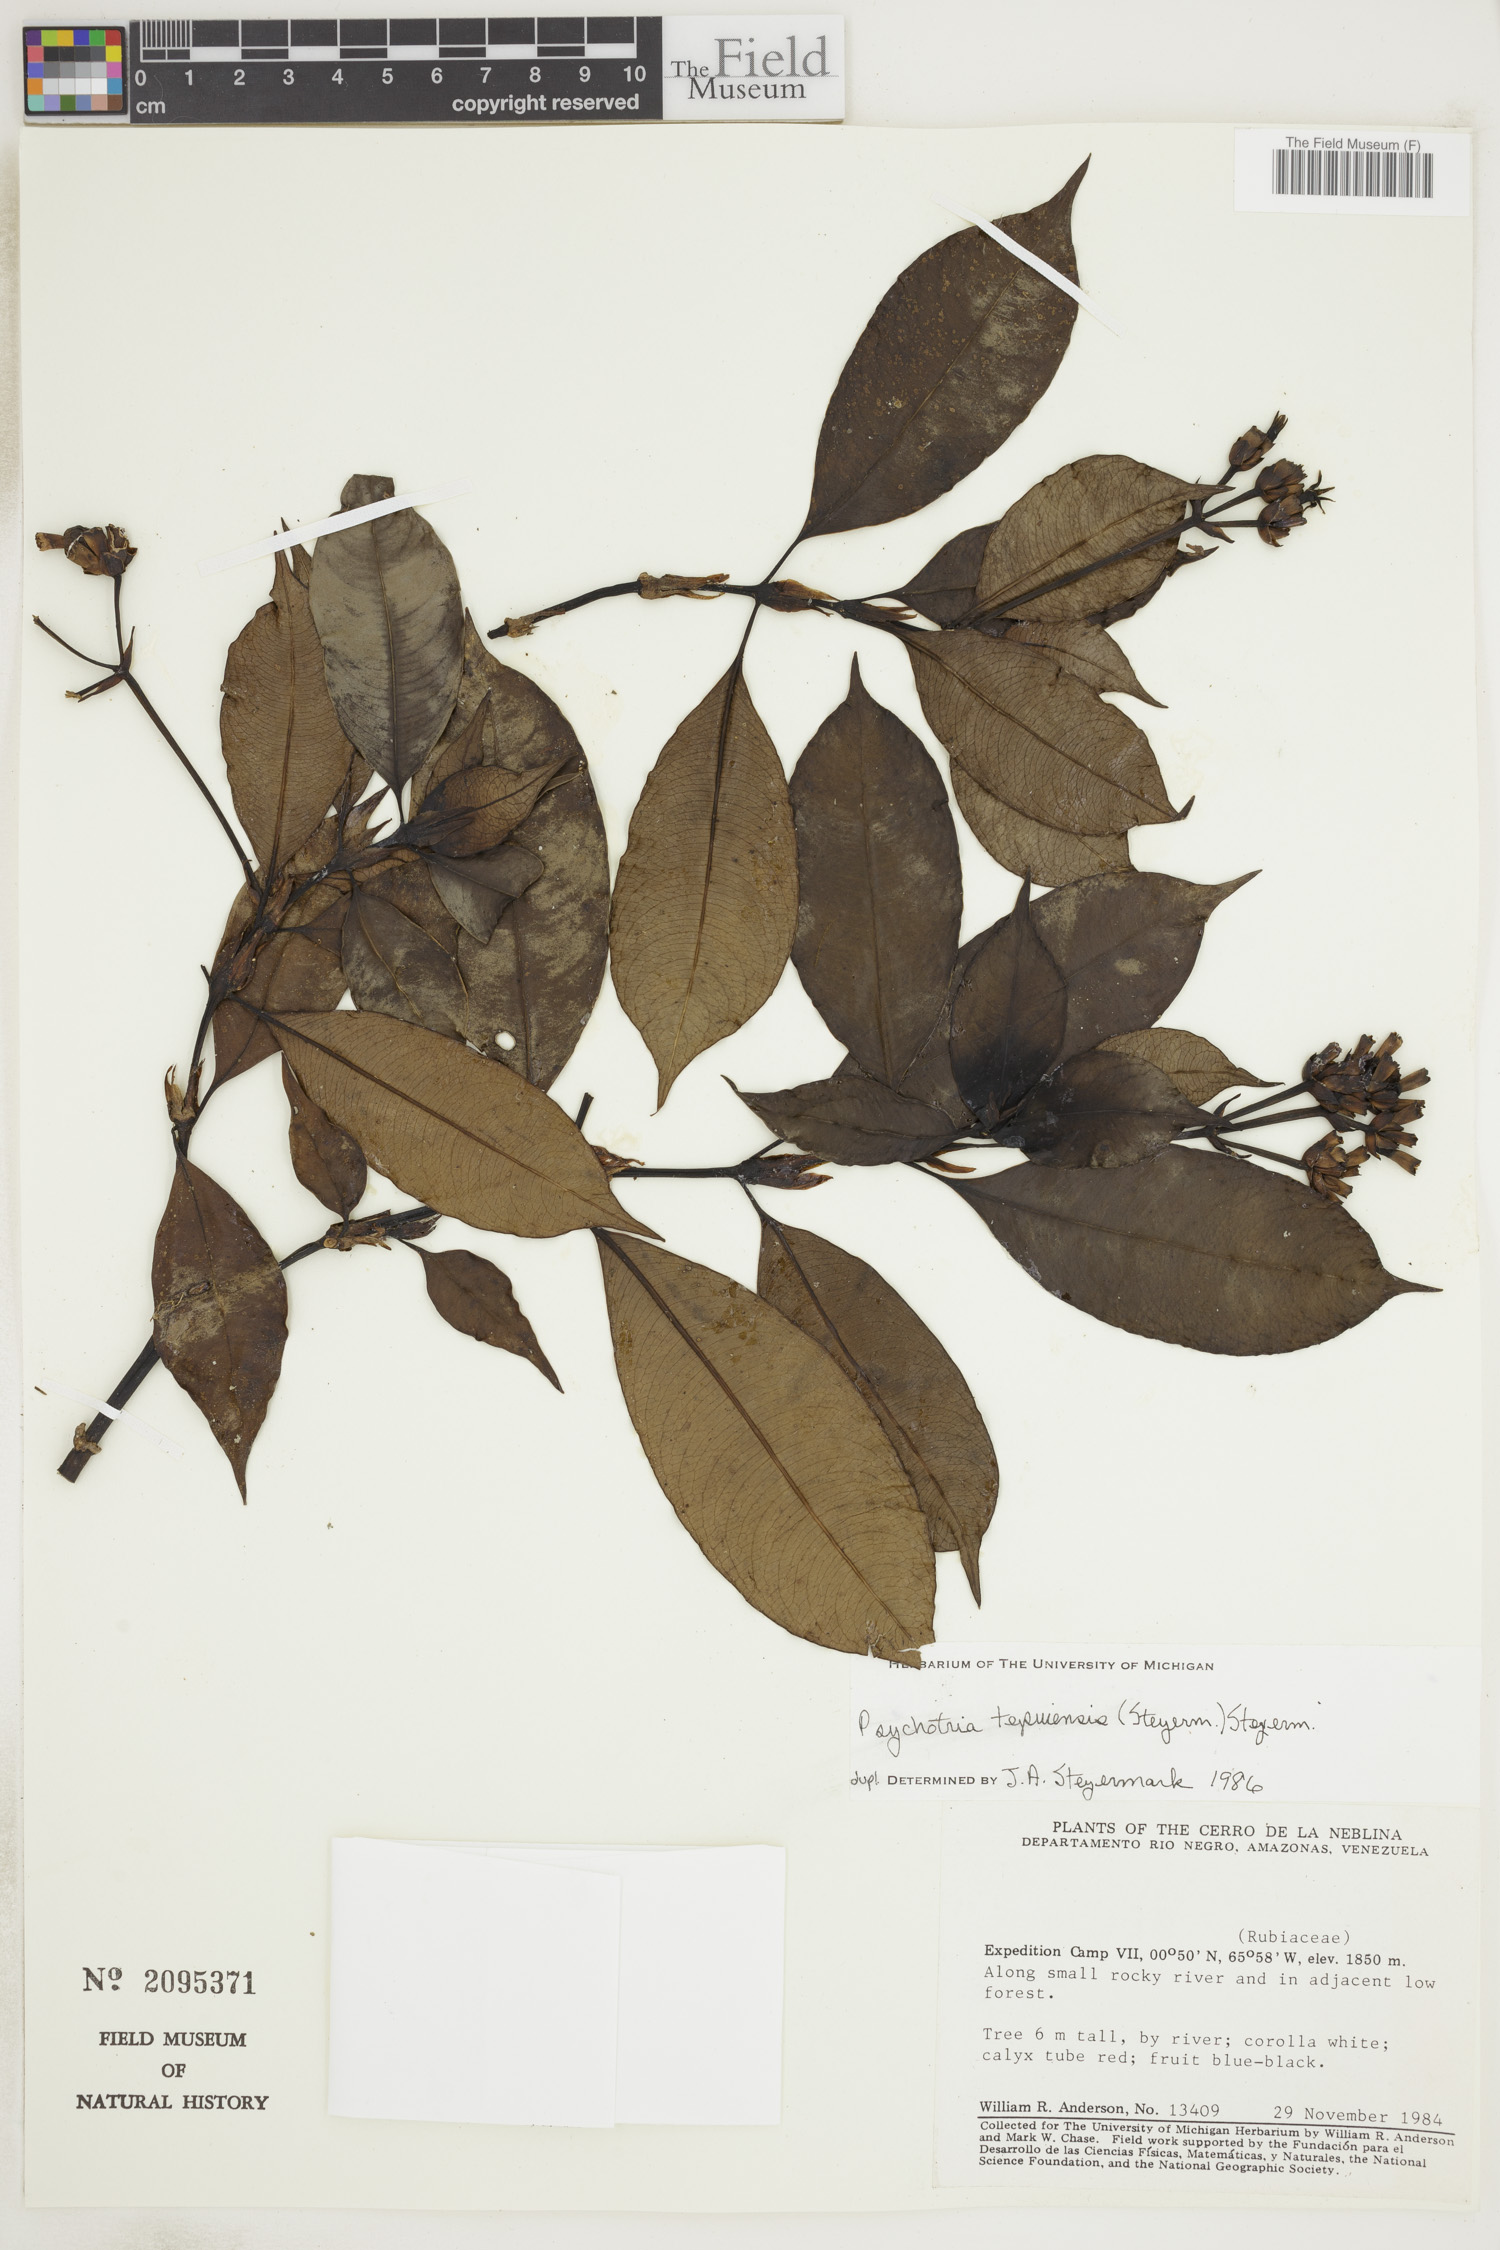 Psychotria tepuiensis image